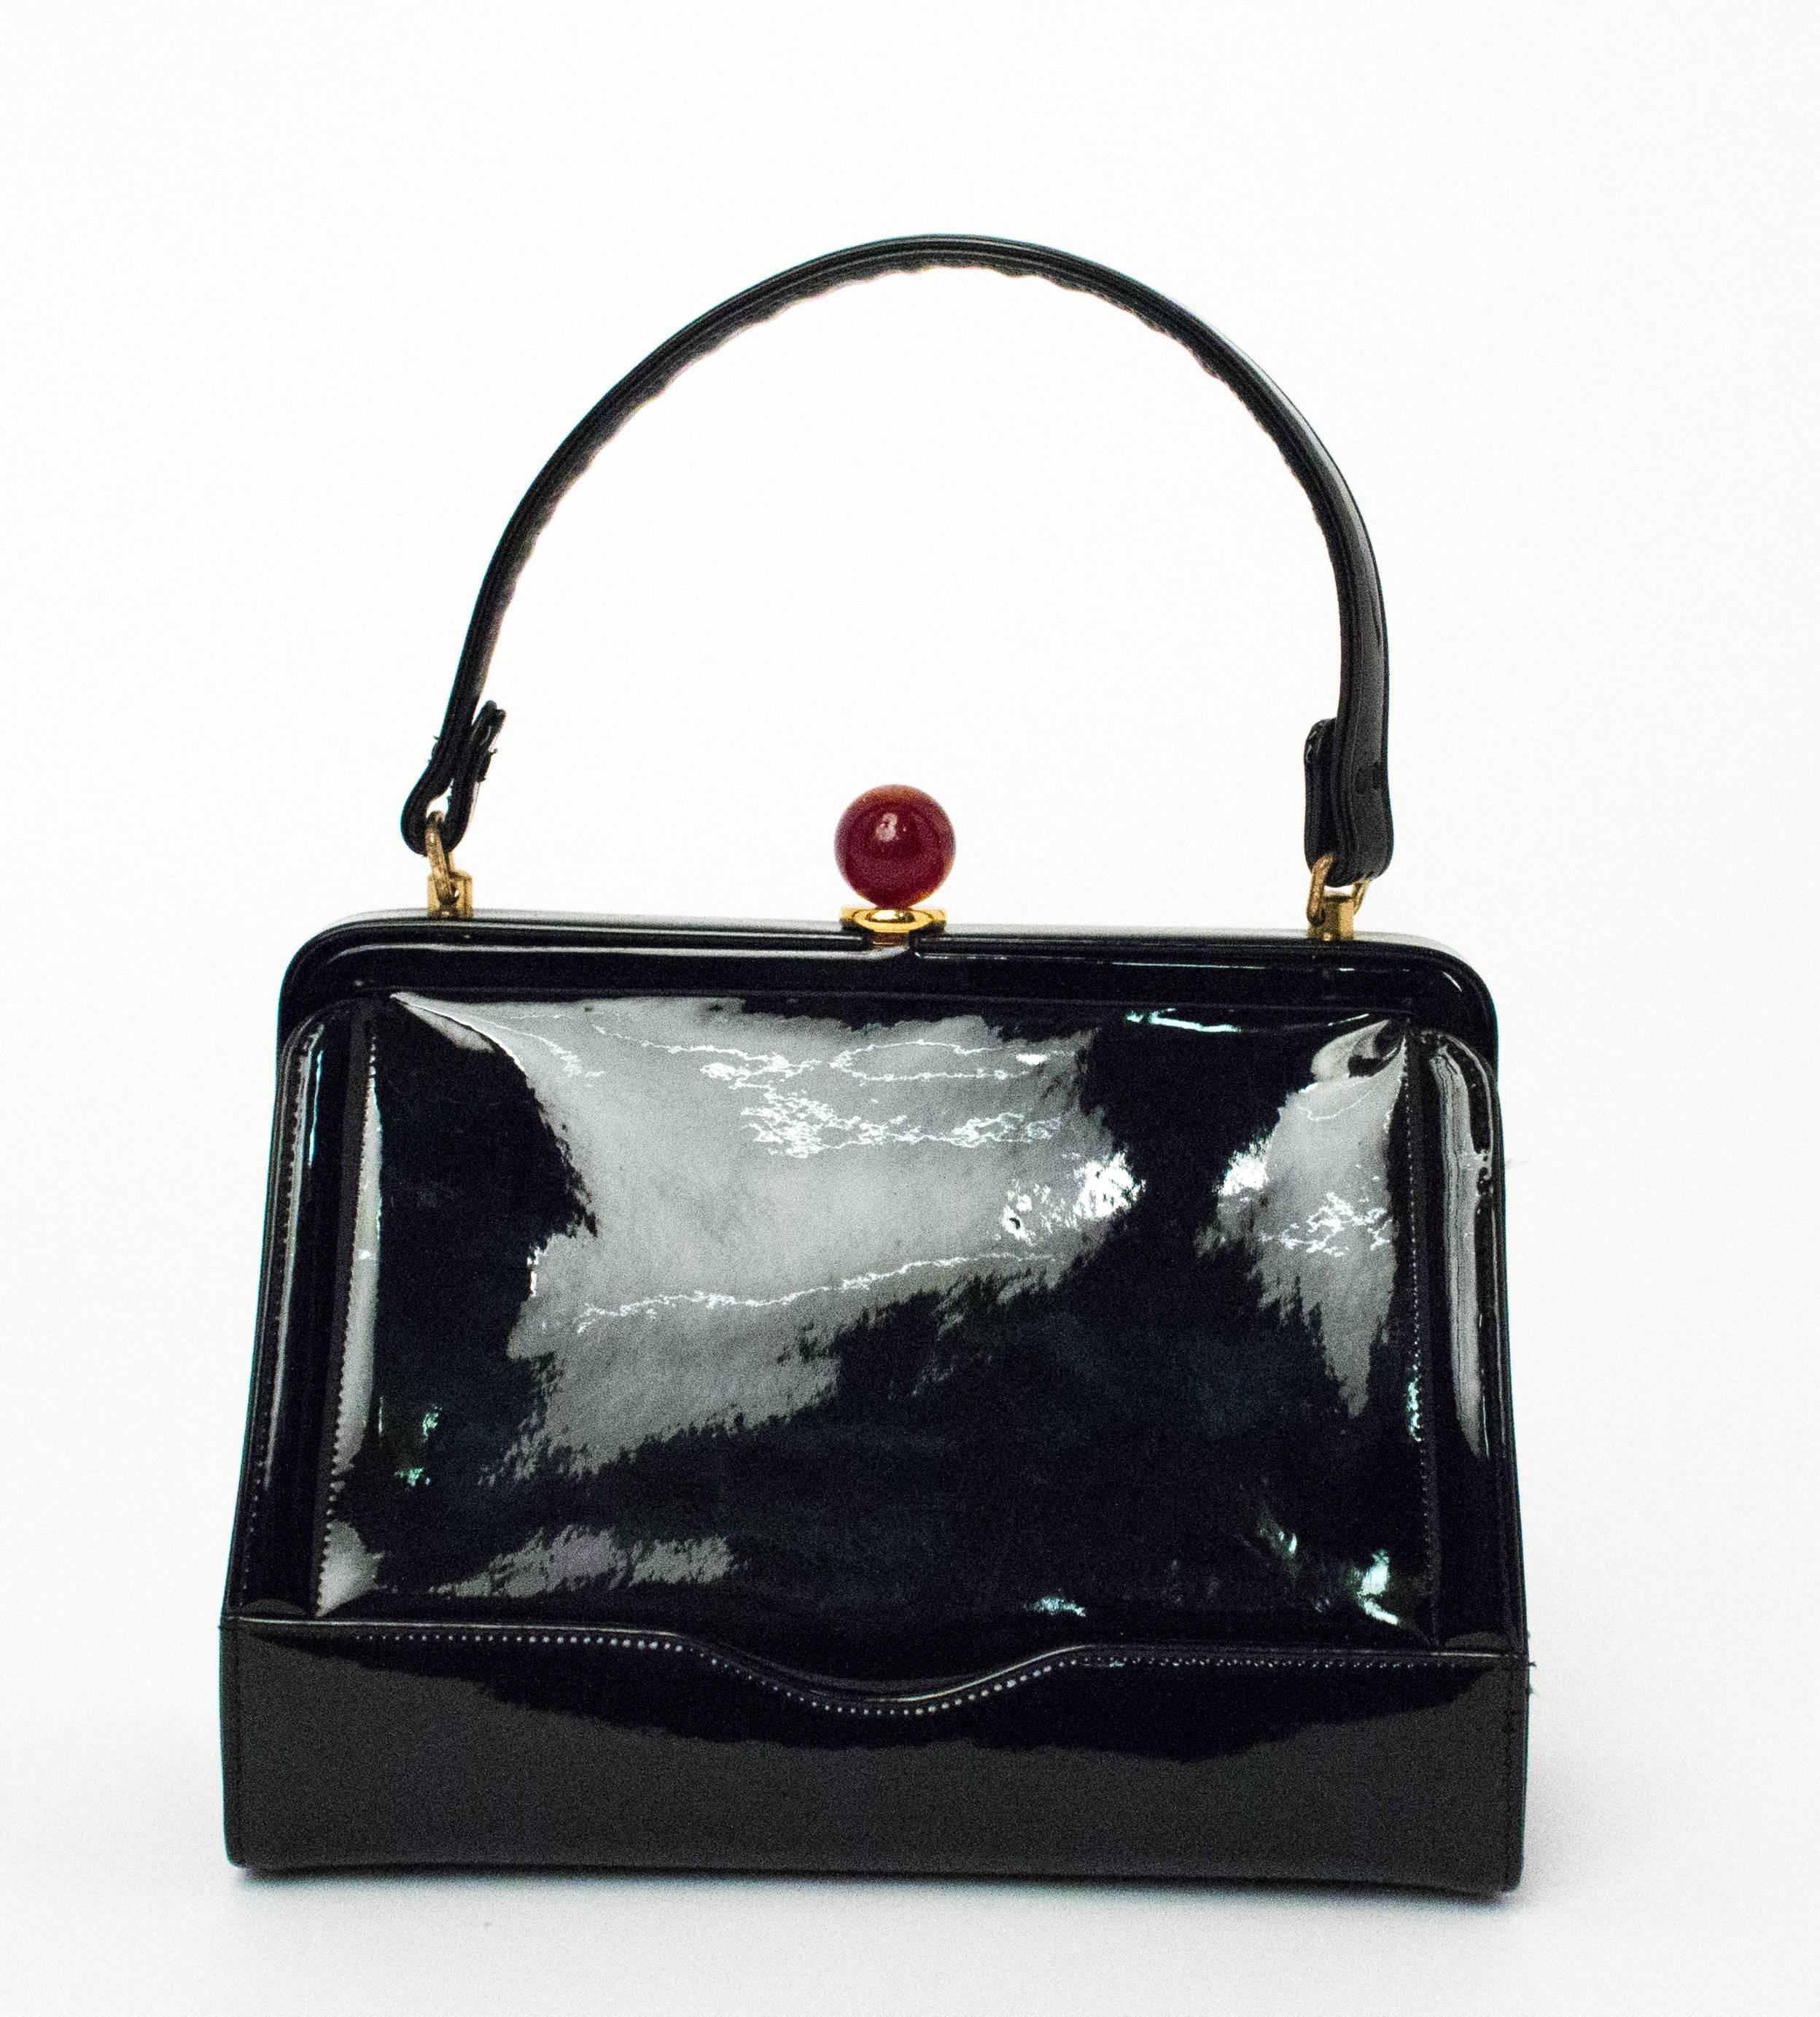 50s Coblentz Original black handbag with bakelite clasp. Original mirror, and coin purse included. 